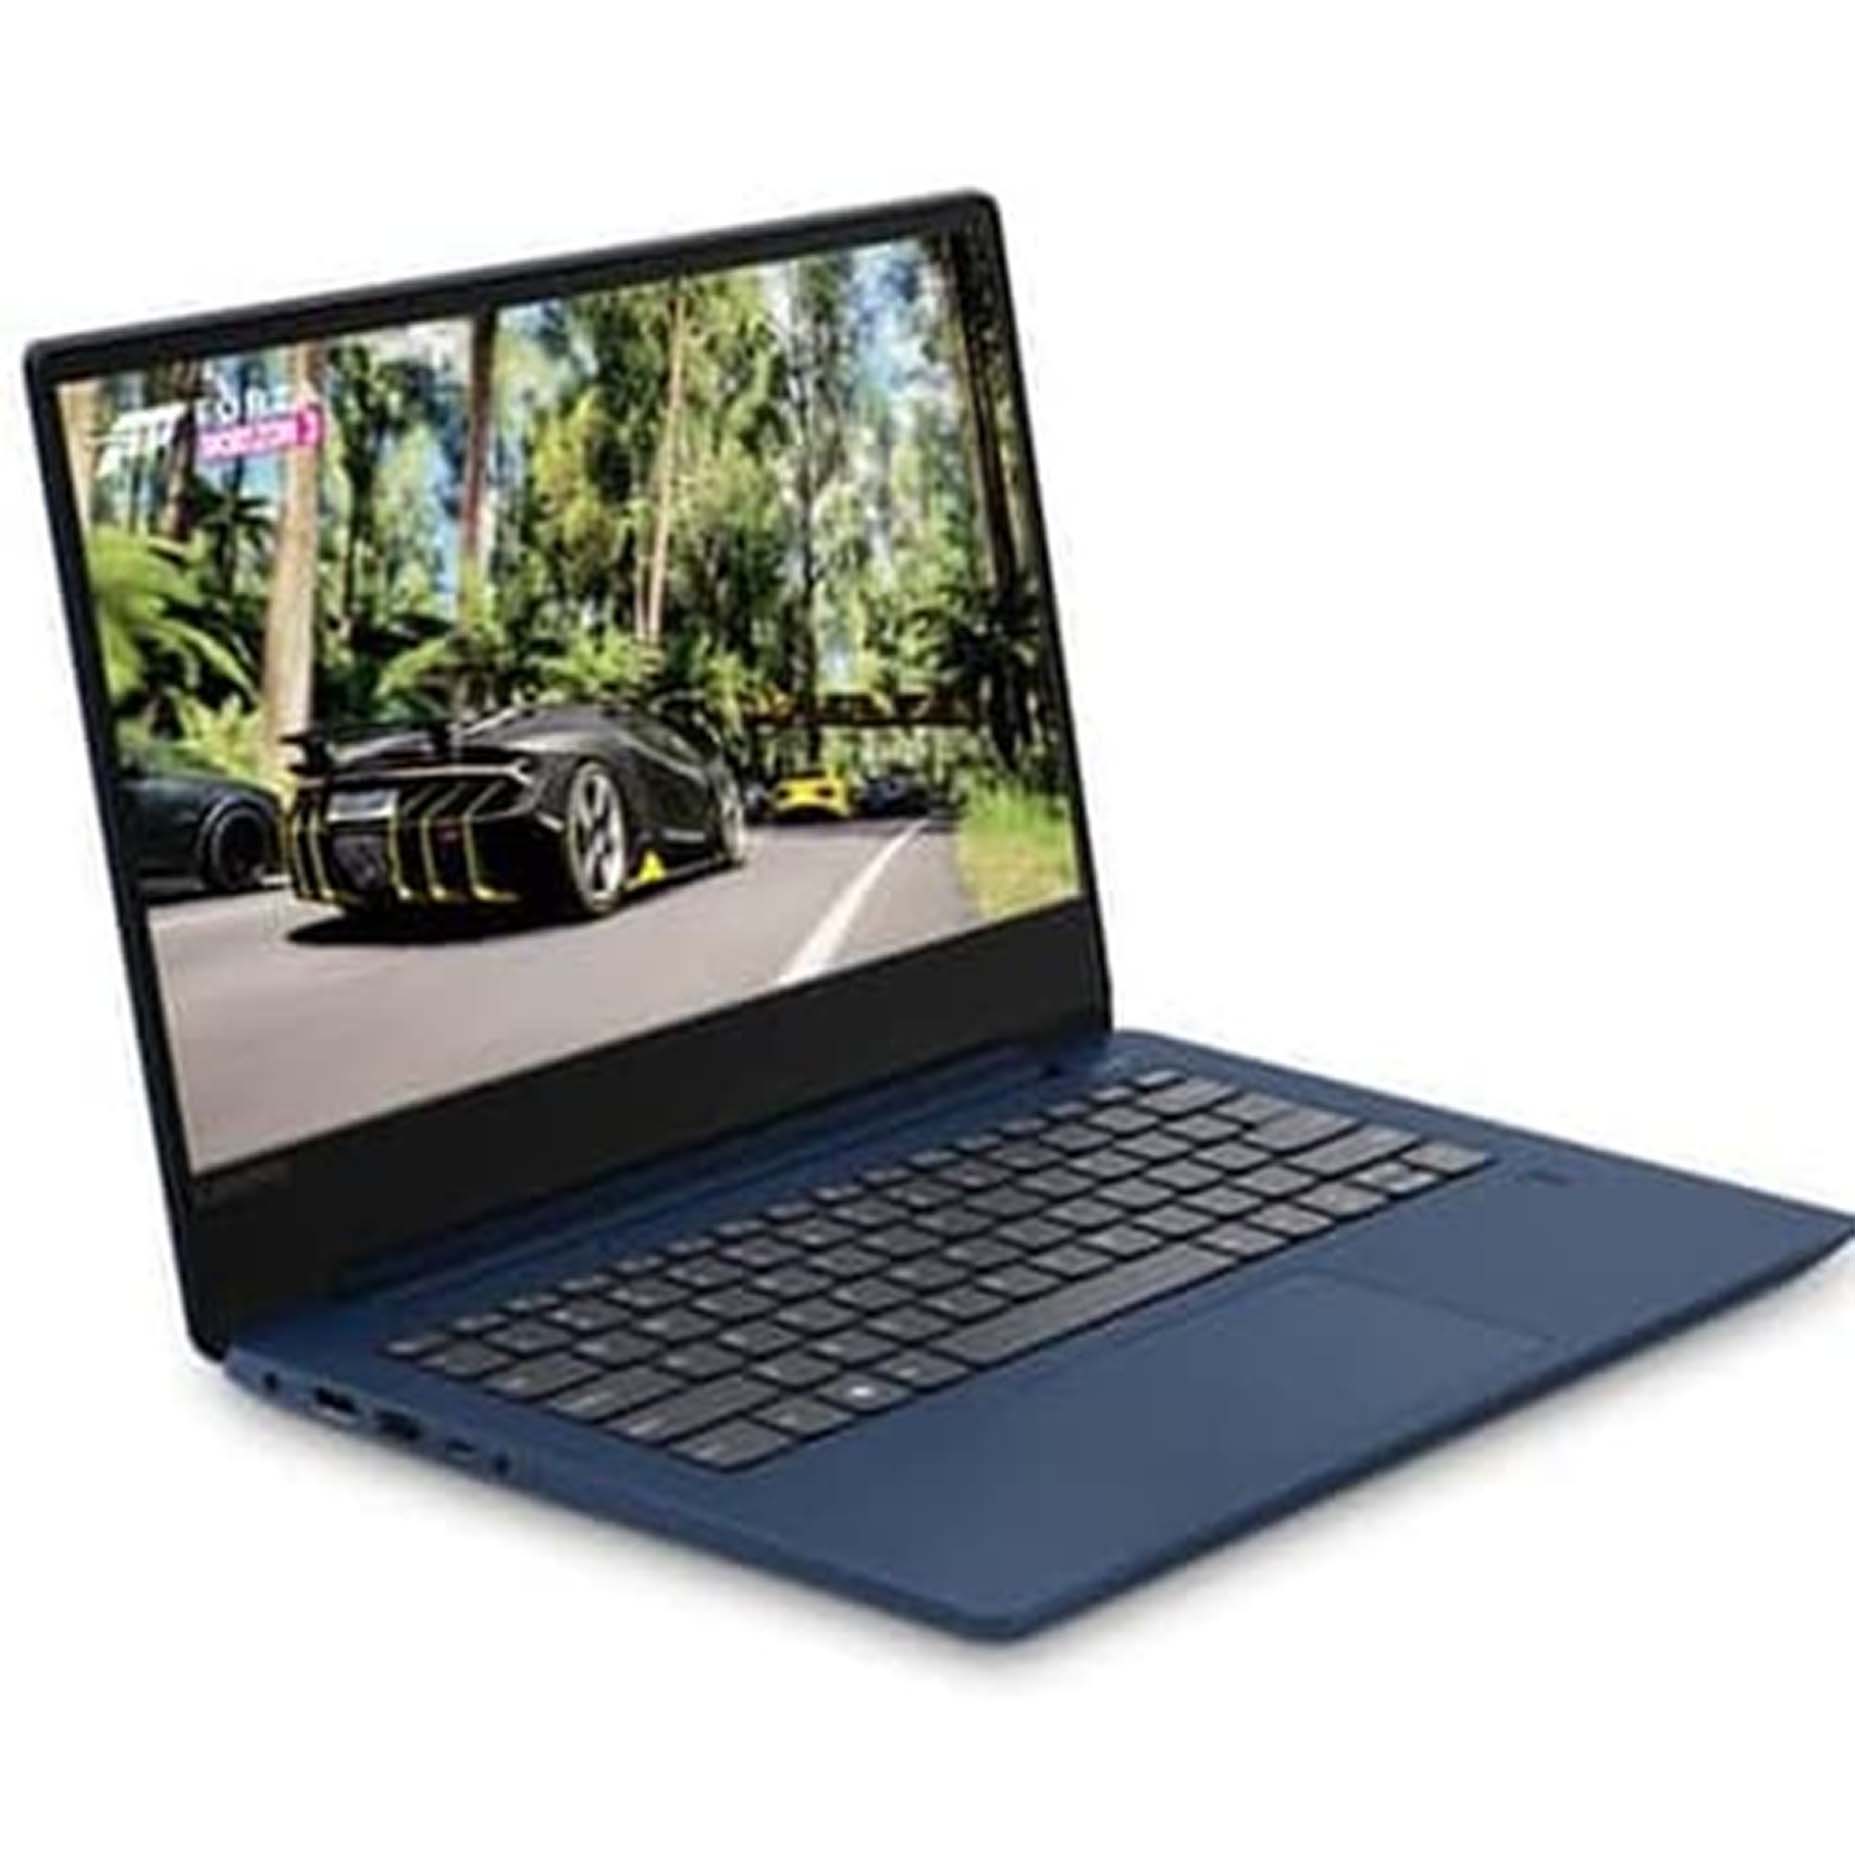 Harga Lenovo Ideapad IP330-14AST 3AID Laptop AMD Dual Core A9-9425 4GB 1TB 14 Inch Win 10 Blue